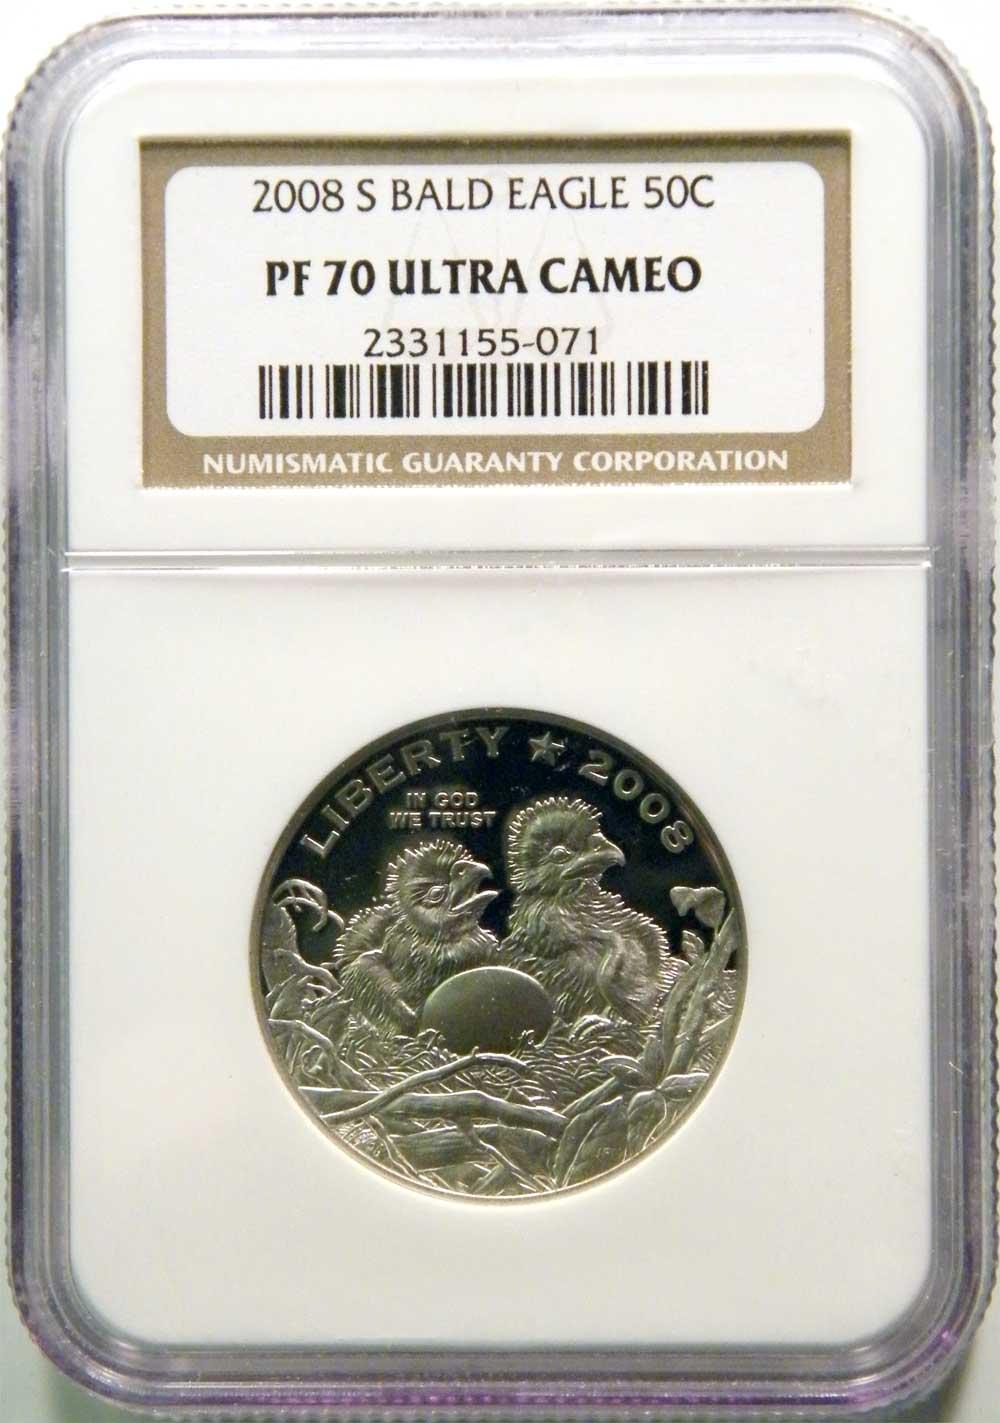 2008-S 50c Bald Eagle Half Dollar in NGC PF 70 UCAM COMMEMORATIVE ULTRA CAMEO